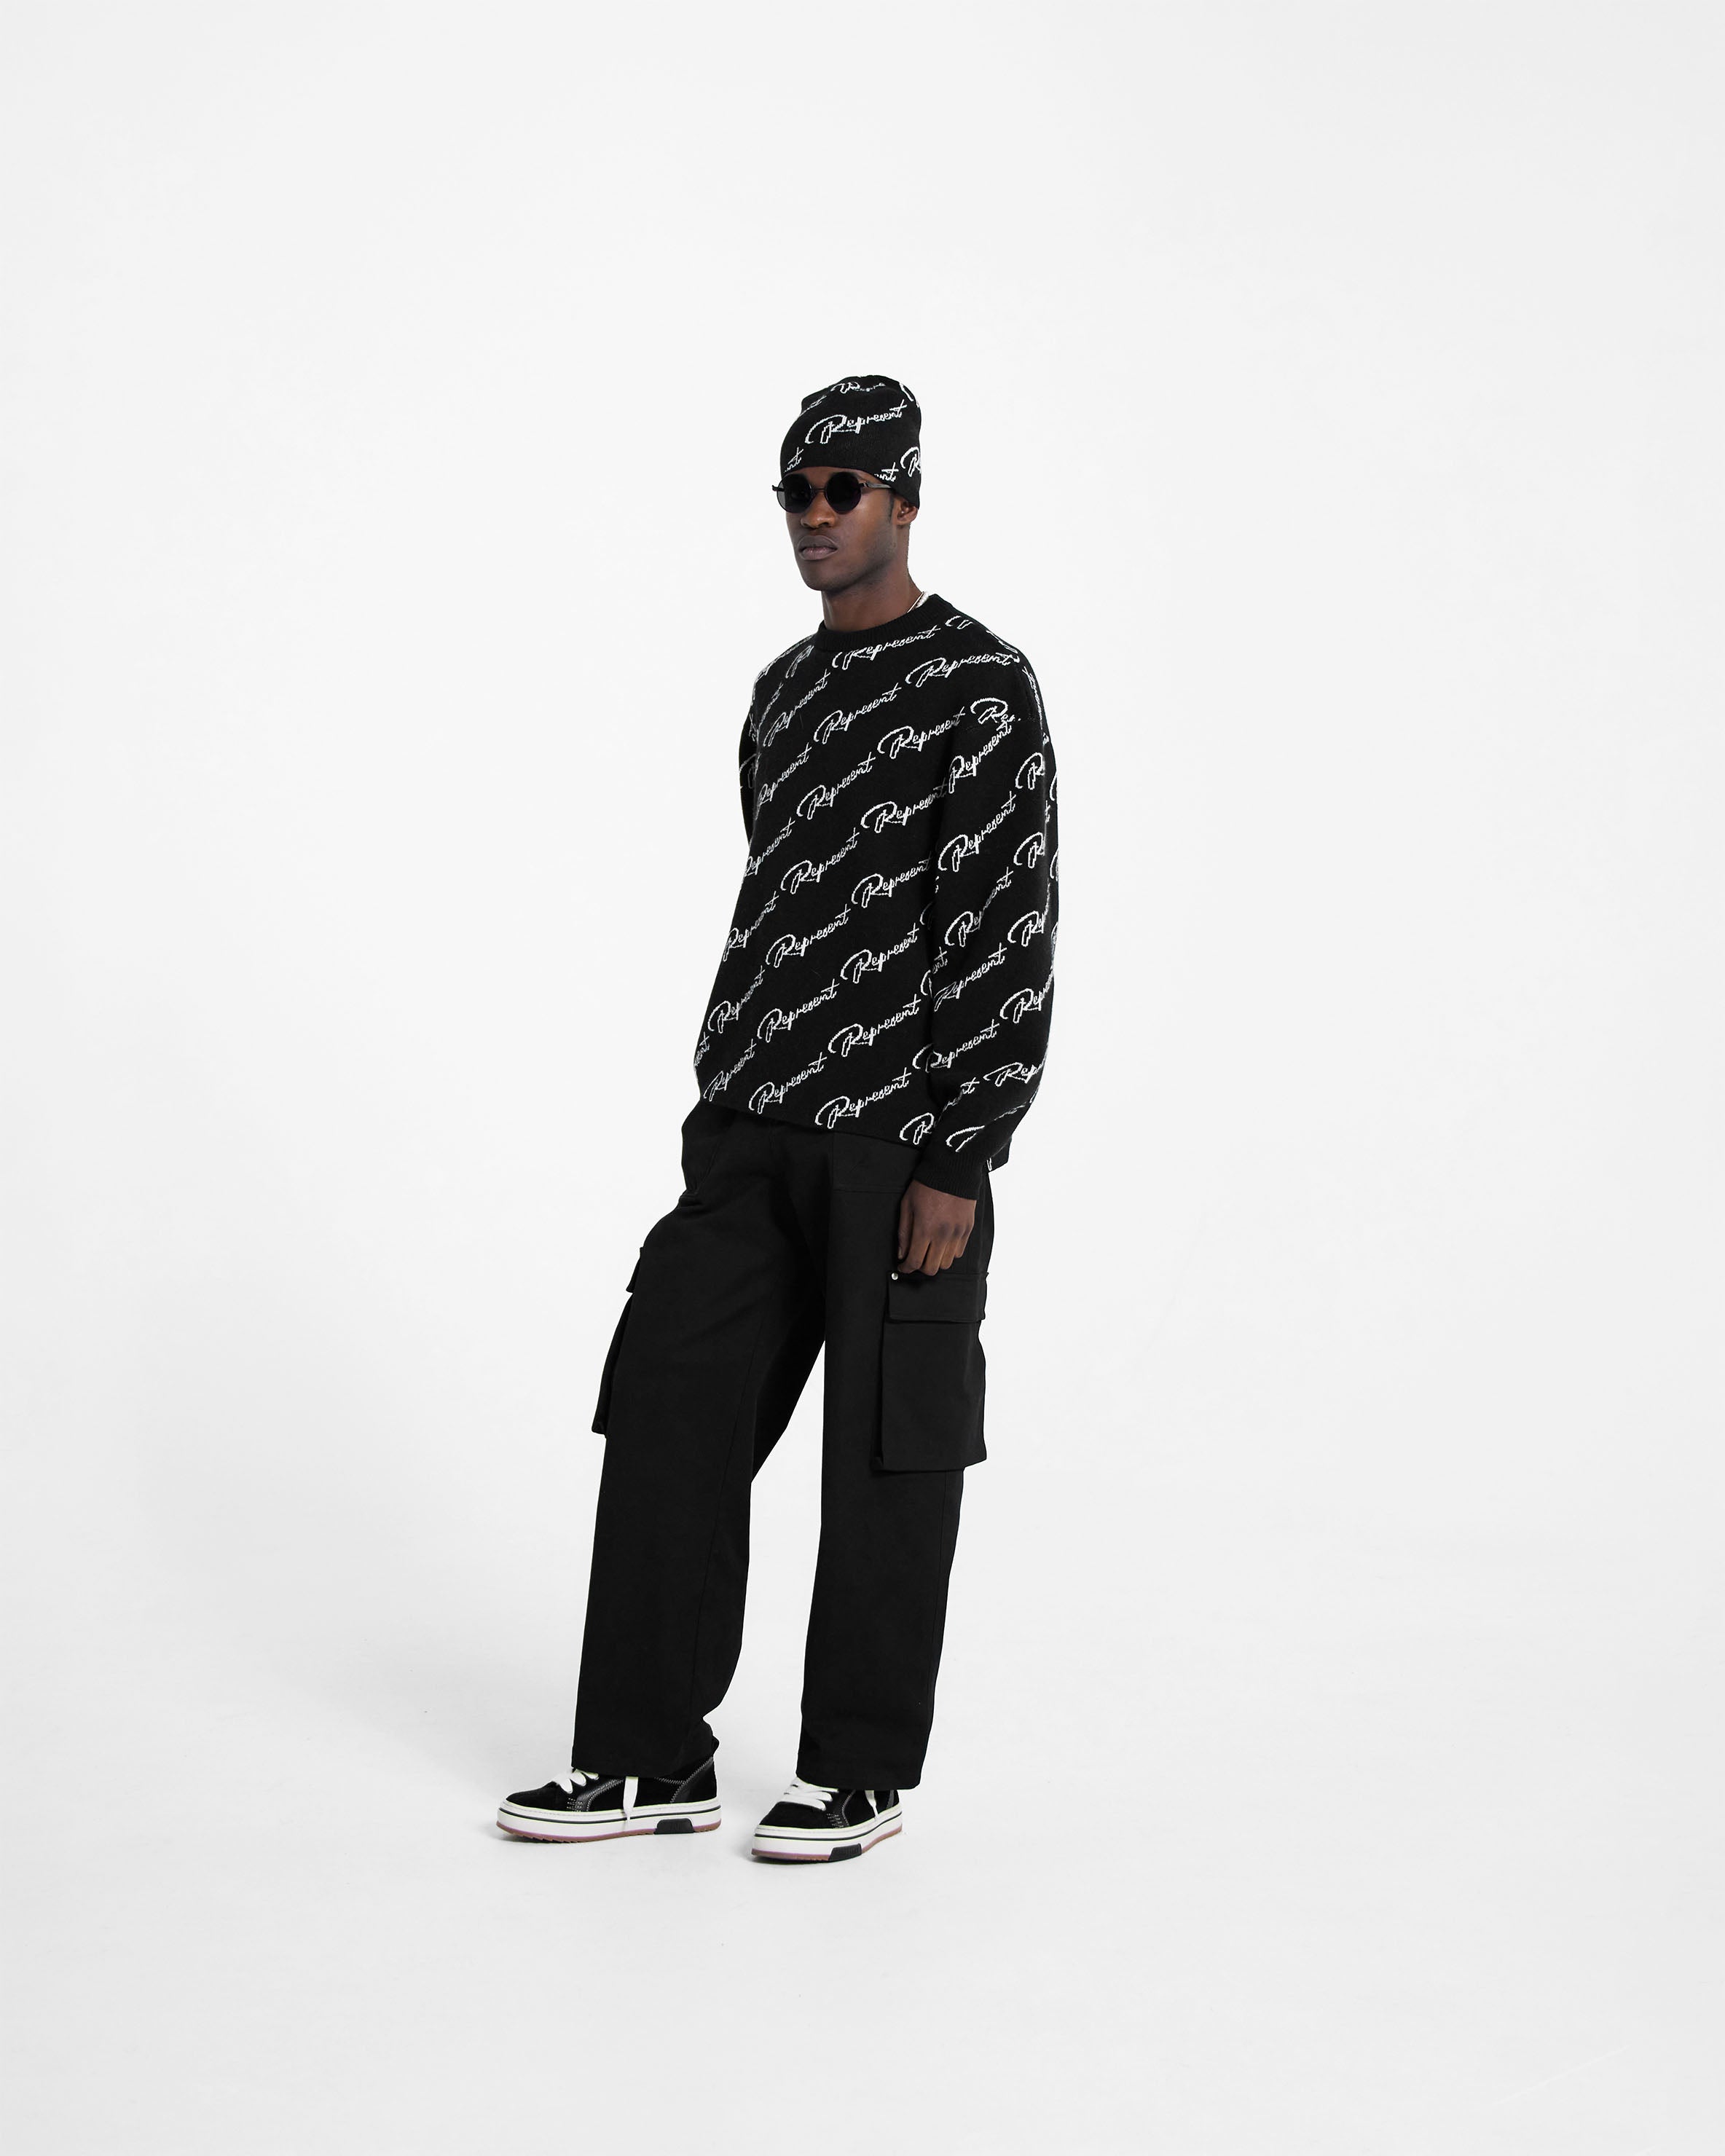 Represent Jacquard Sweater - Black